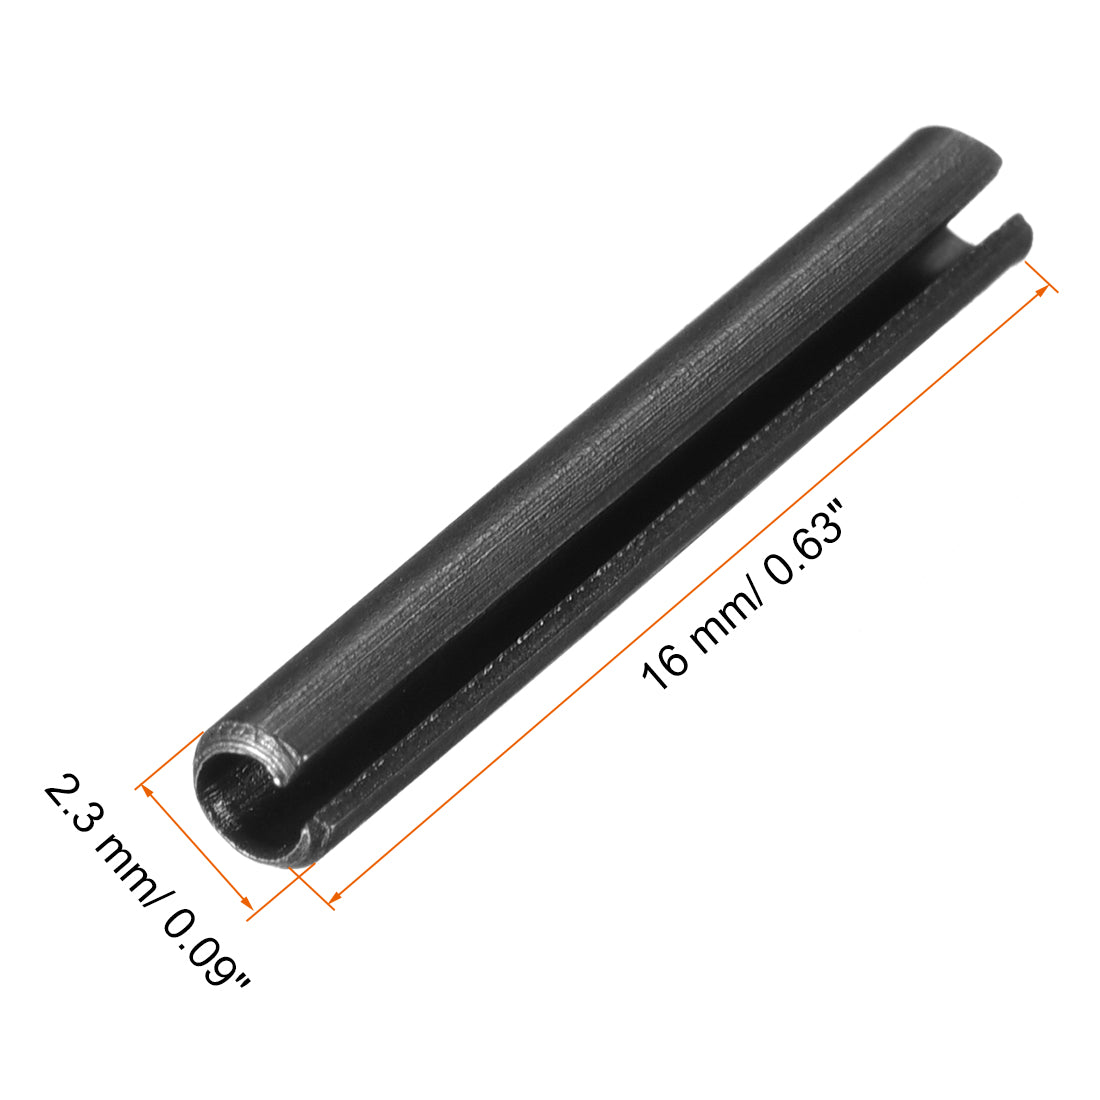 uxcell Uxcell 2.3mm x 16mm Dowel Pin Carbon Steel Split Spring Roll Shelf Support Pin Fasten Hardware Black 30 Pcs